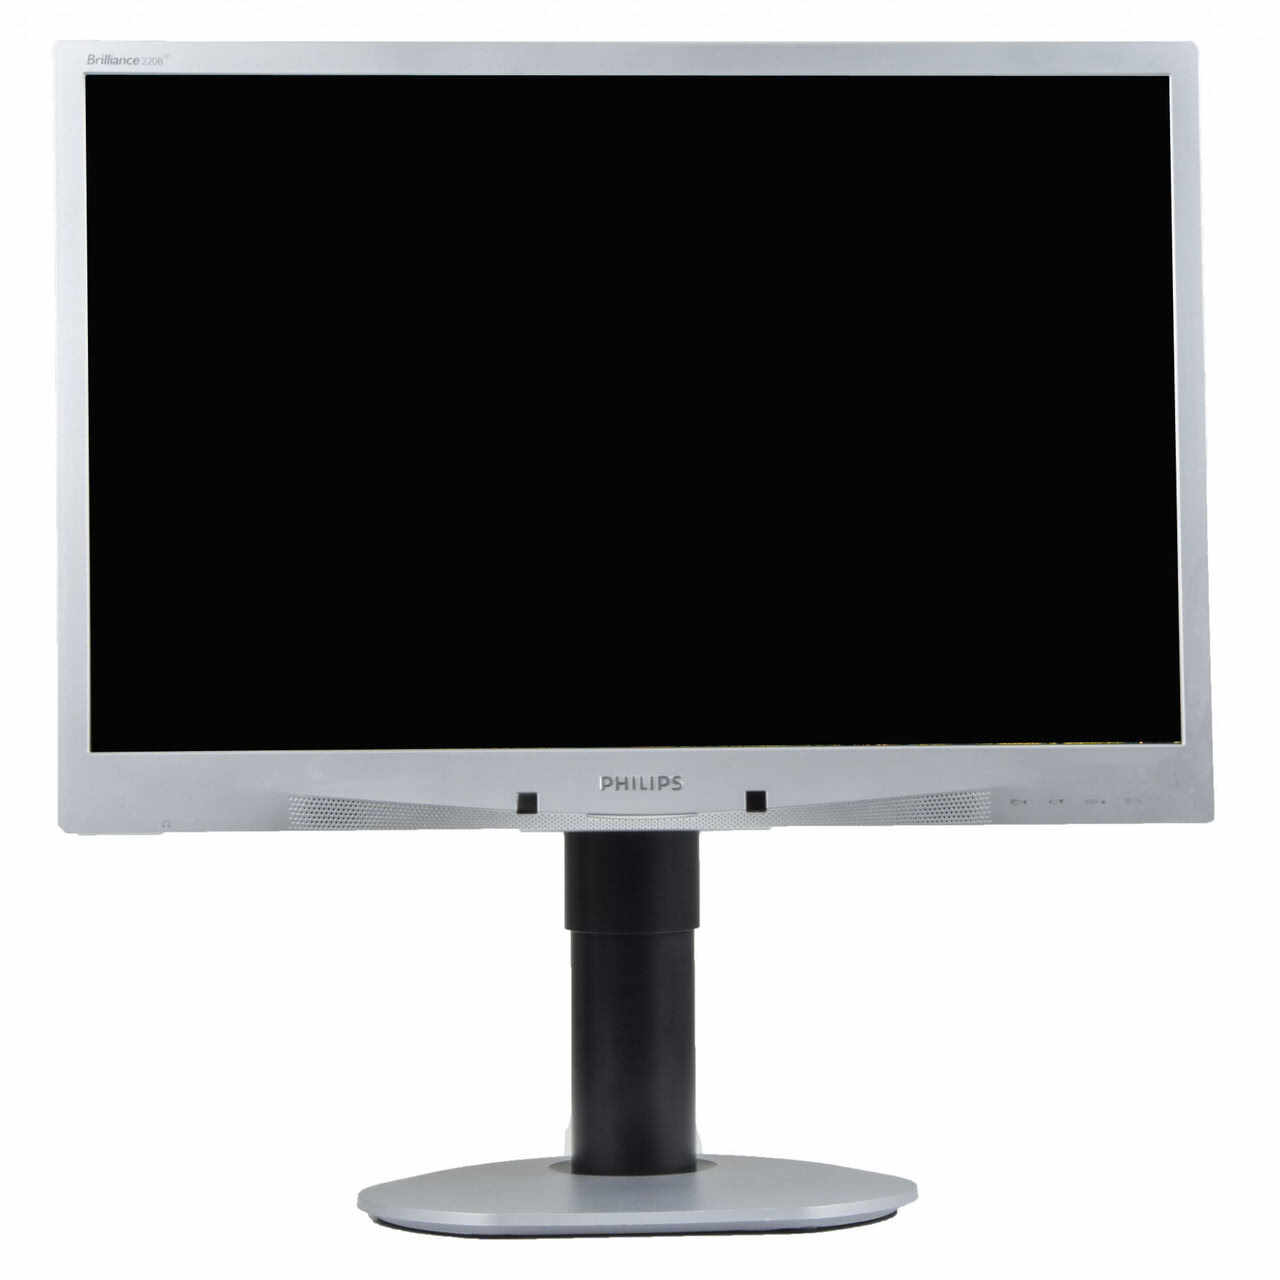 Monitor Philips 220BW, 22 Inch LCD, 1680 x 1050, VGA, DVI, USB, Fara picior